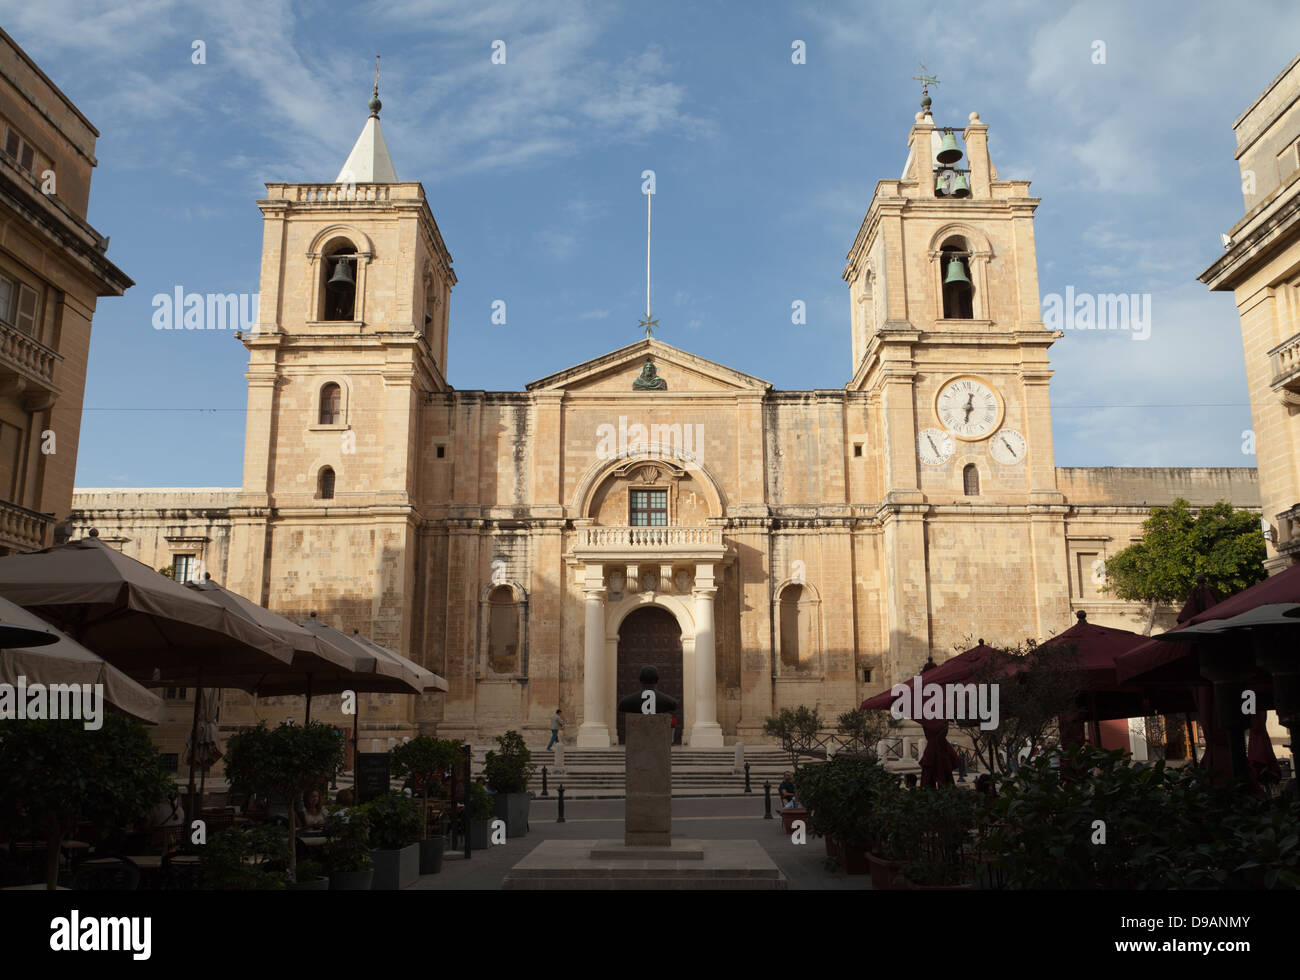 St. Johns Co-Cathedral, Valletta, Malta. Stock Photo